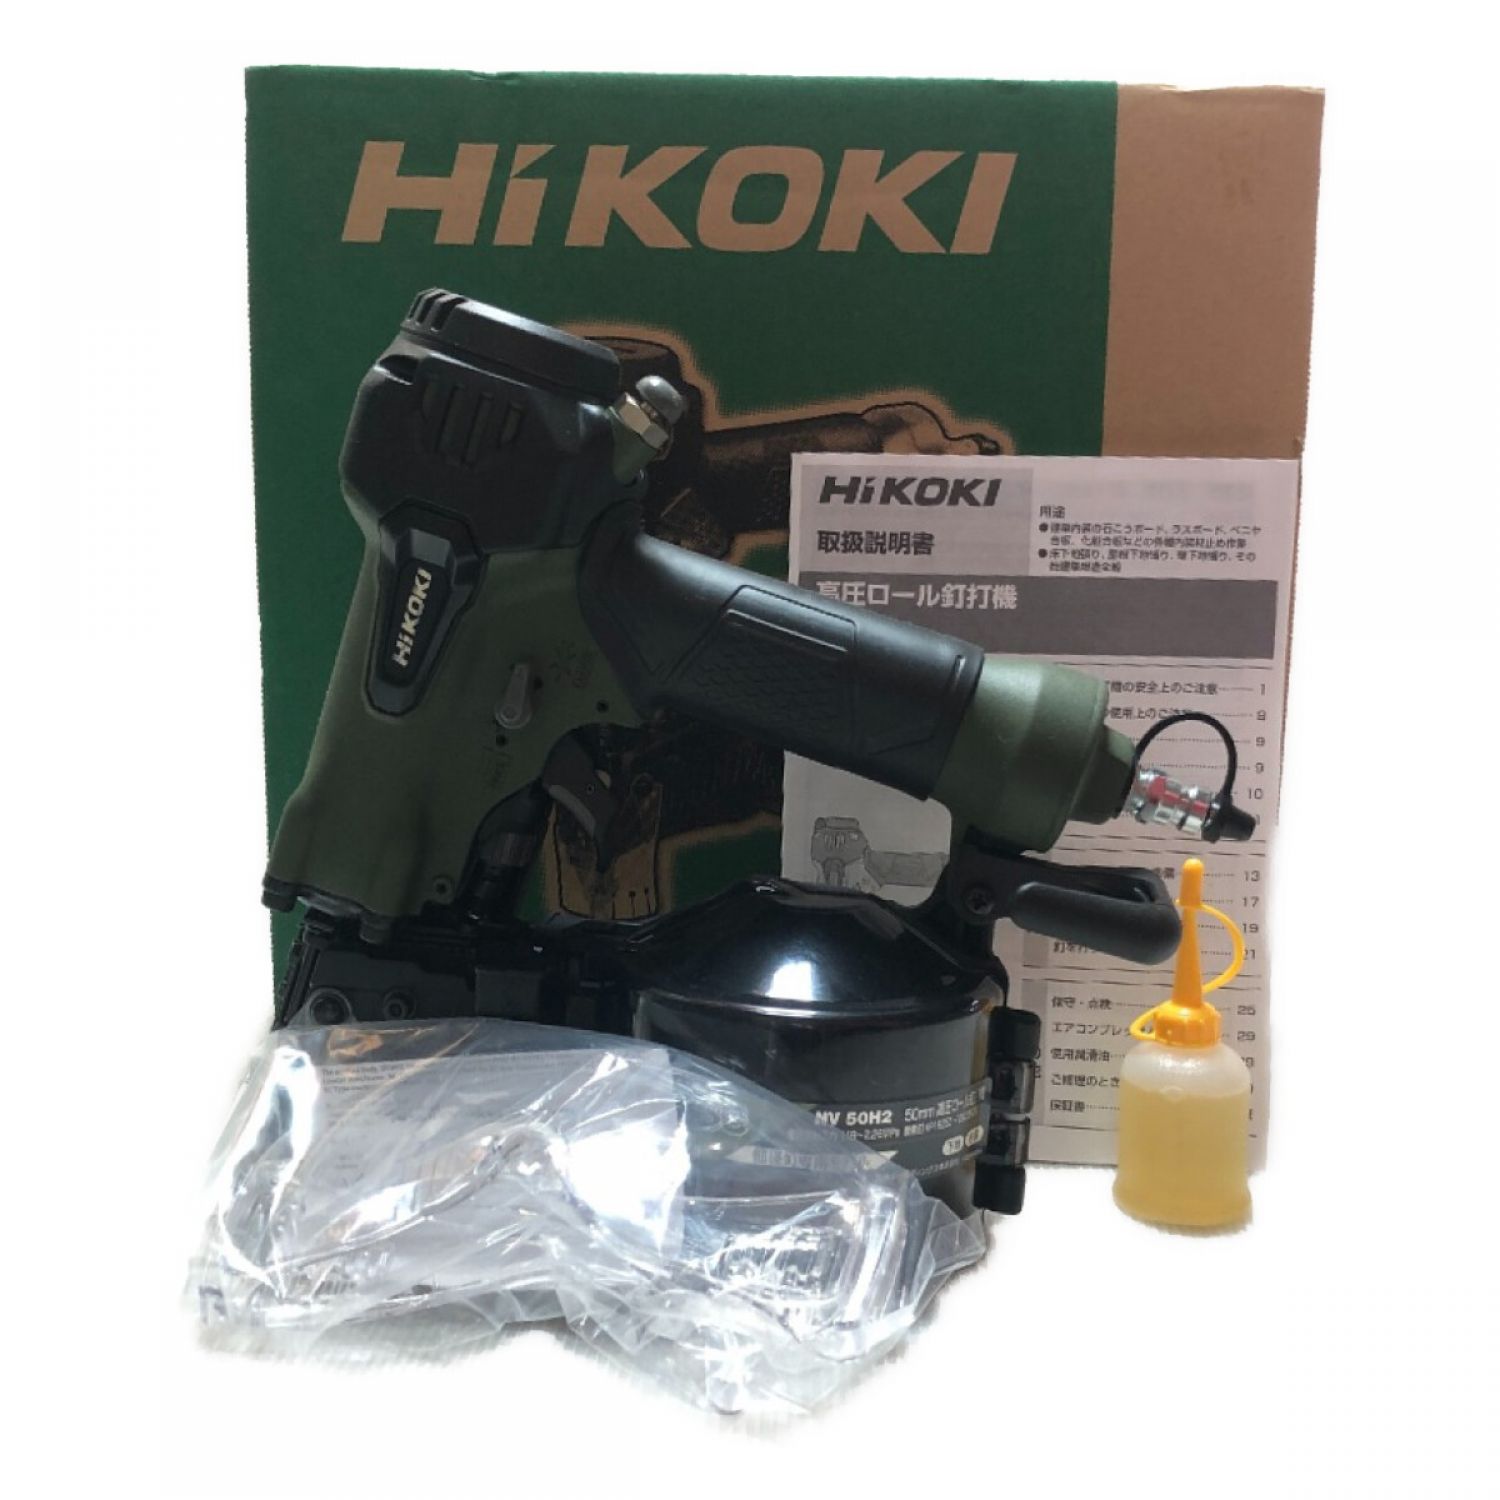 HiKOKI(ハイコーキ) 高圧エア釘打ち機 NV50H2 小型・軽量 :s